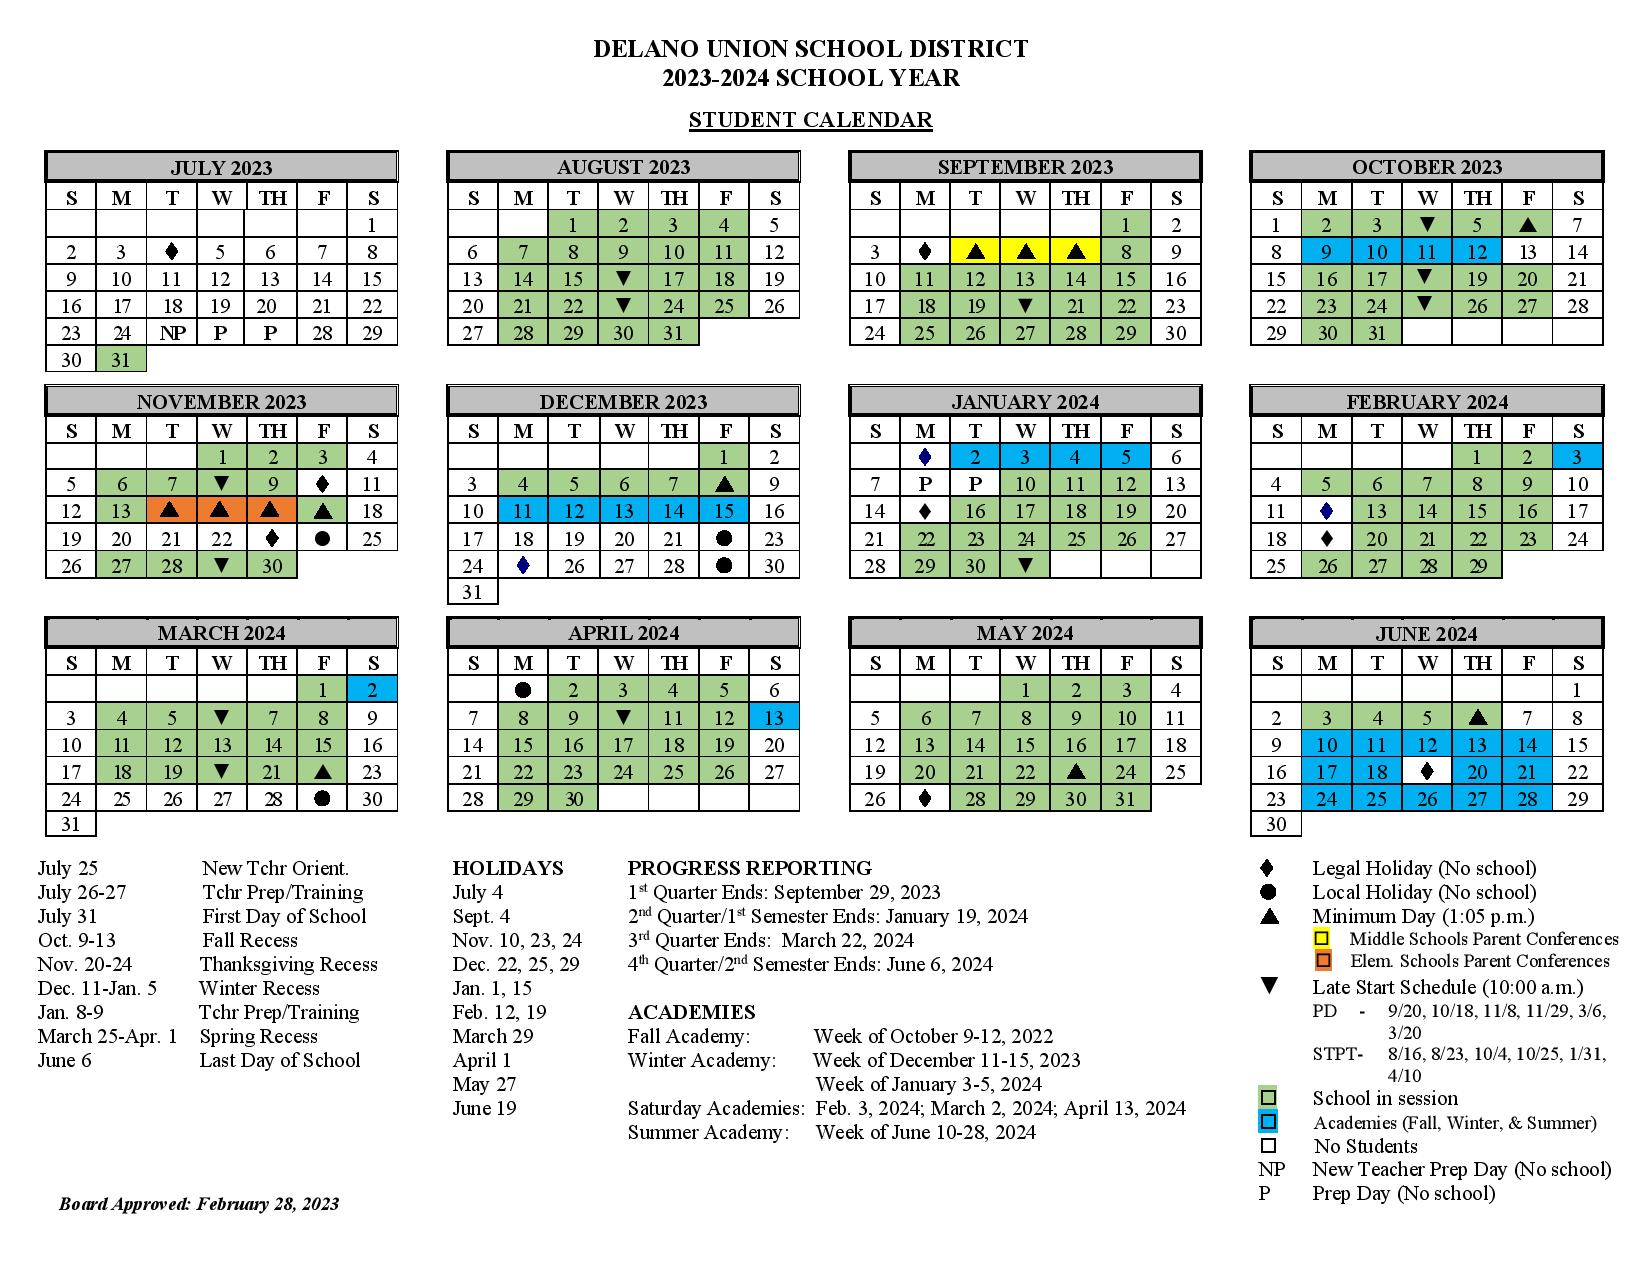 DUSD Student Calendar 20232024